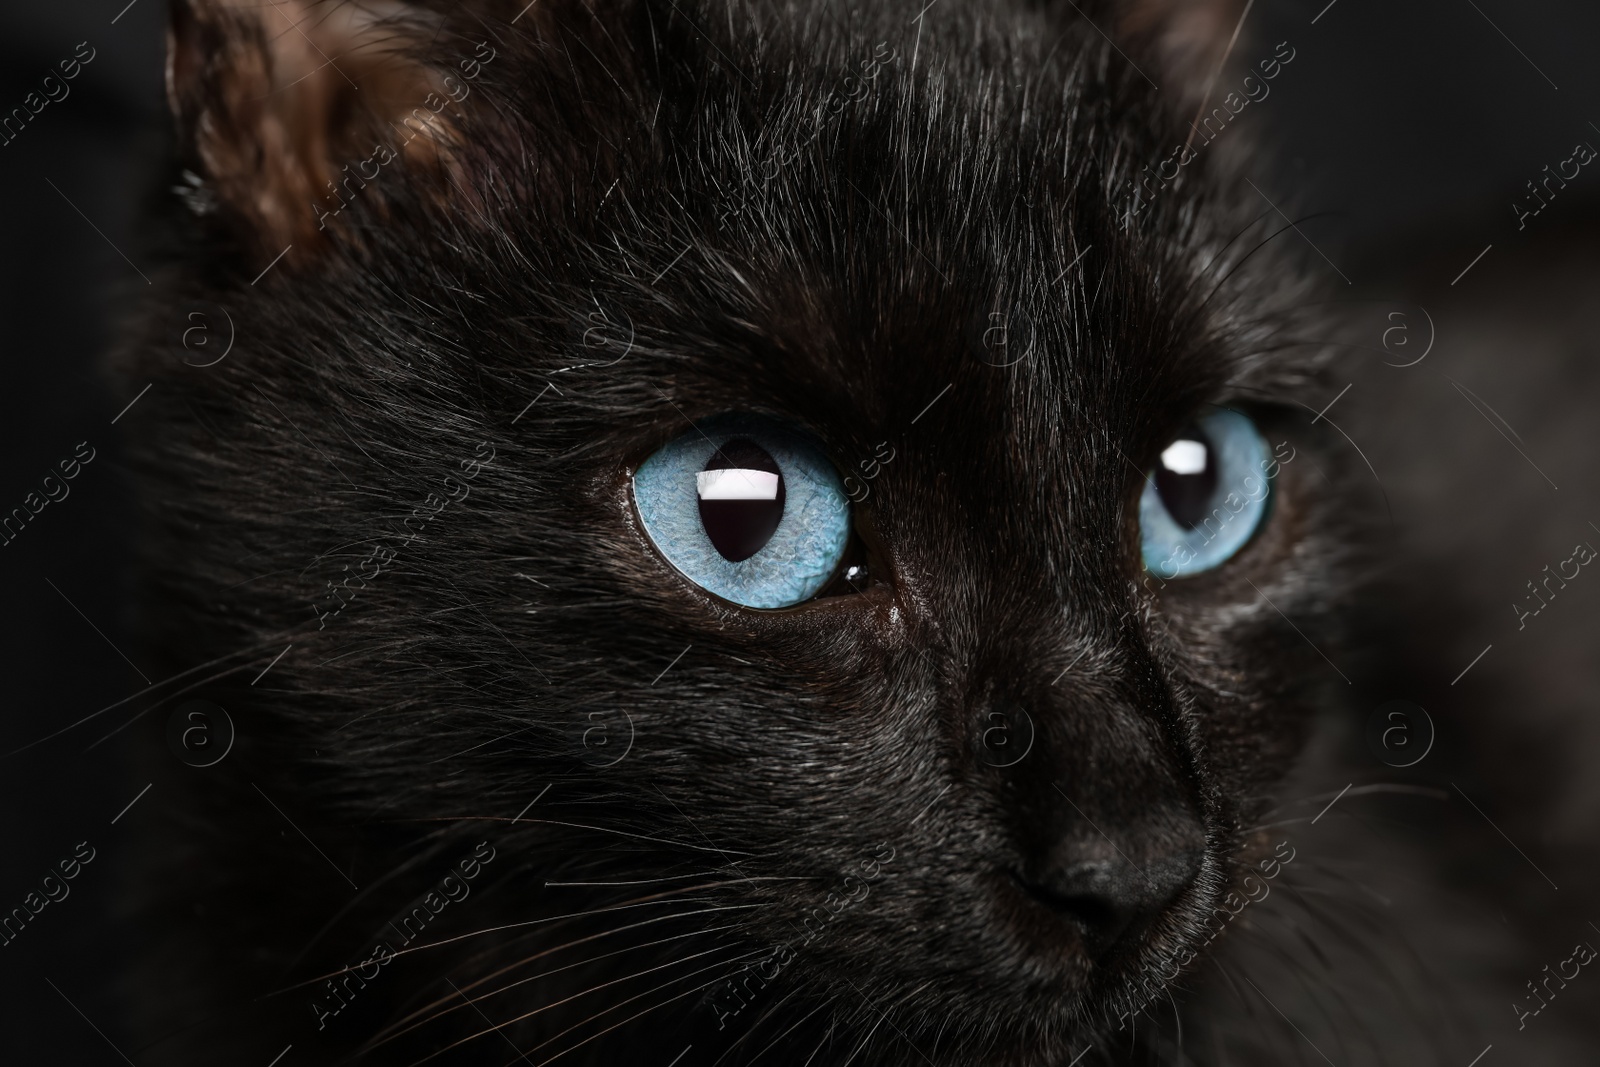 Photo of Black cat with beautiful eyes on dark background, closeup